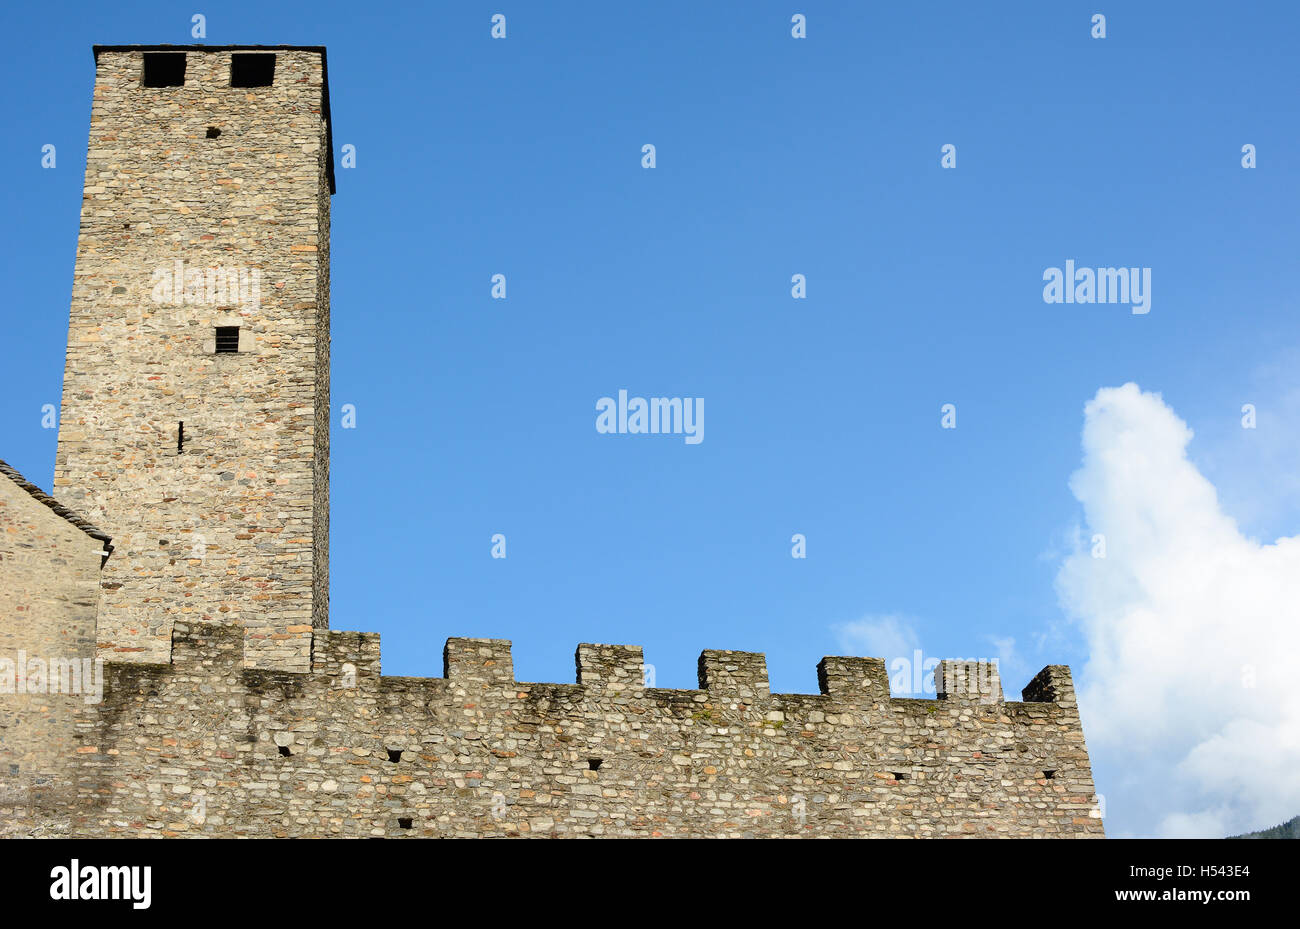 The Torre Bianca (White tower) of the Castelgrande in Bellinzona, Switzerland. A UNESCO World Heritage Site. Stock Photo